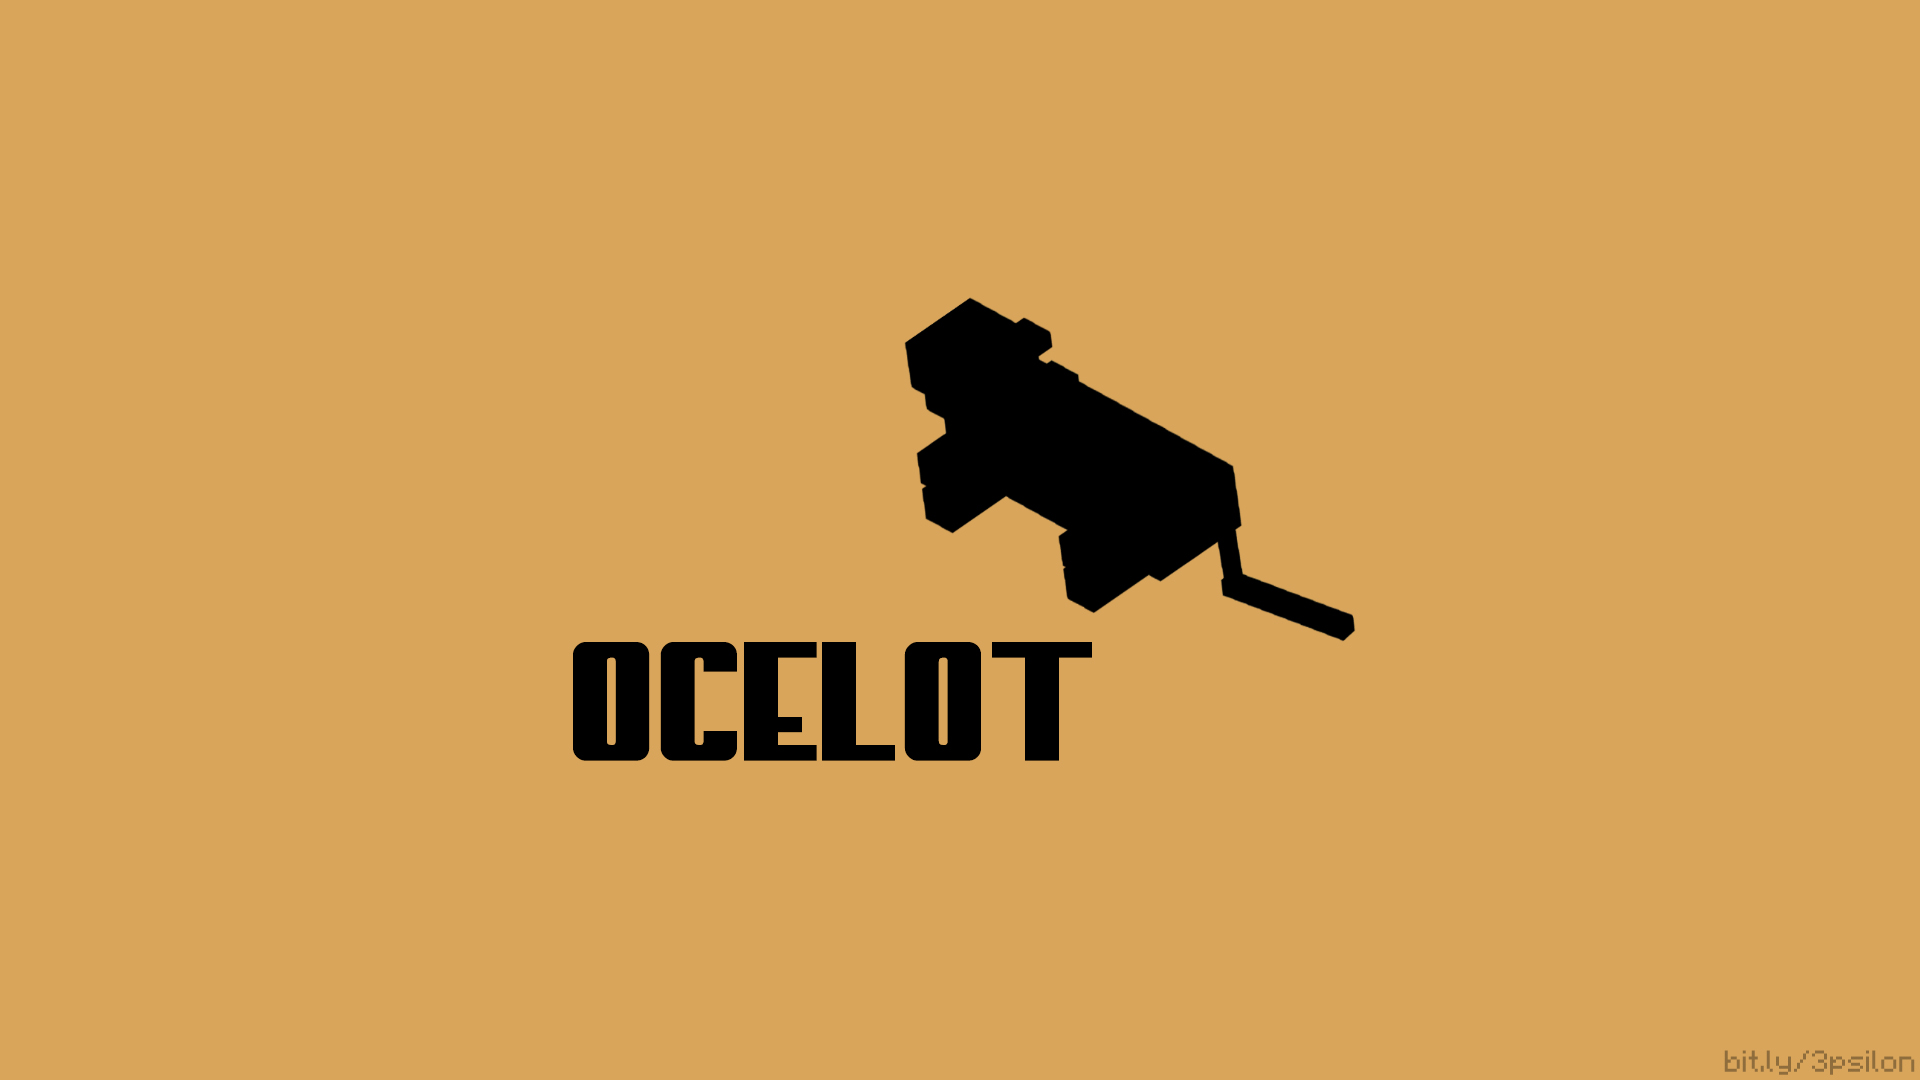 Ocelot  Free Stock Photos